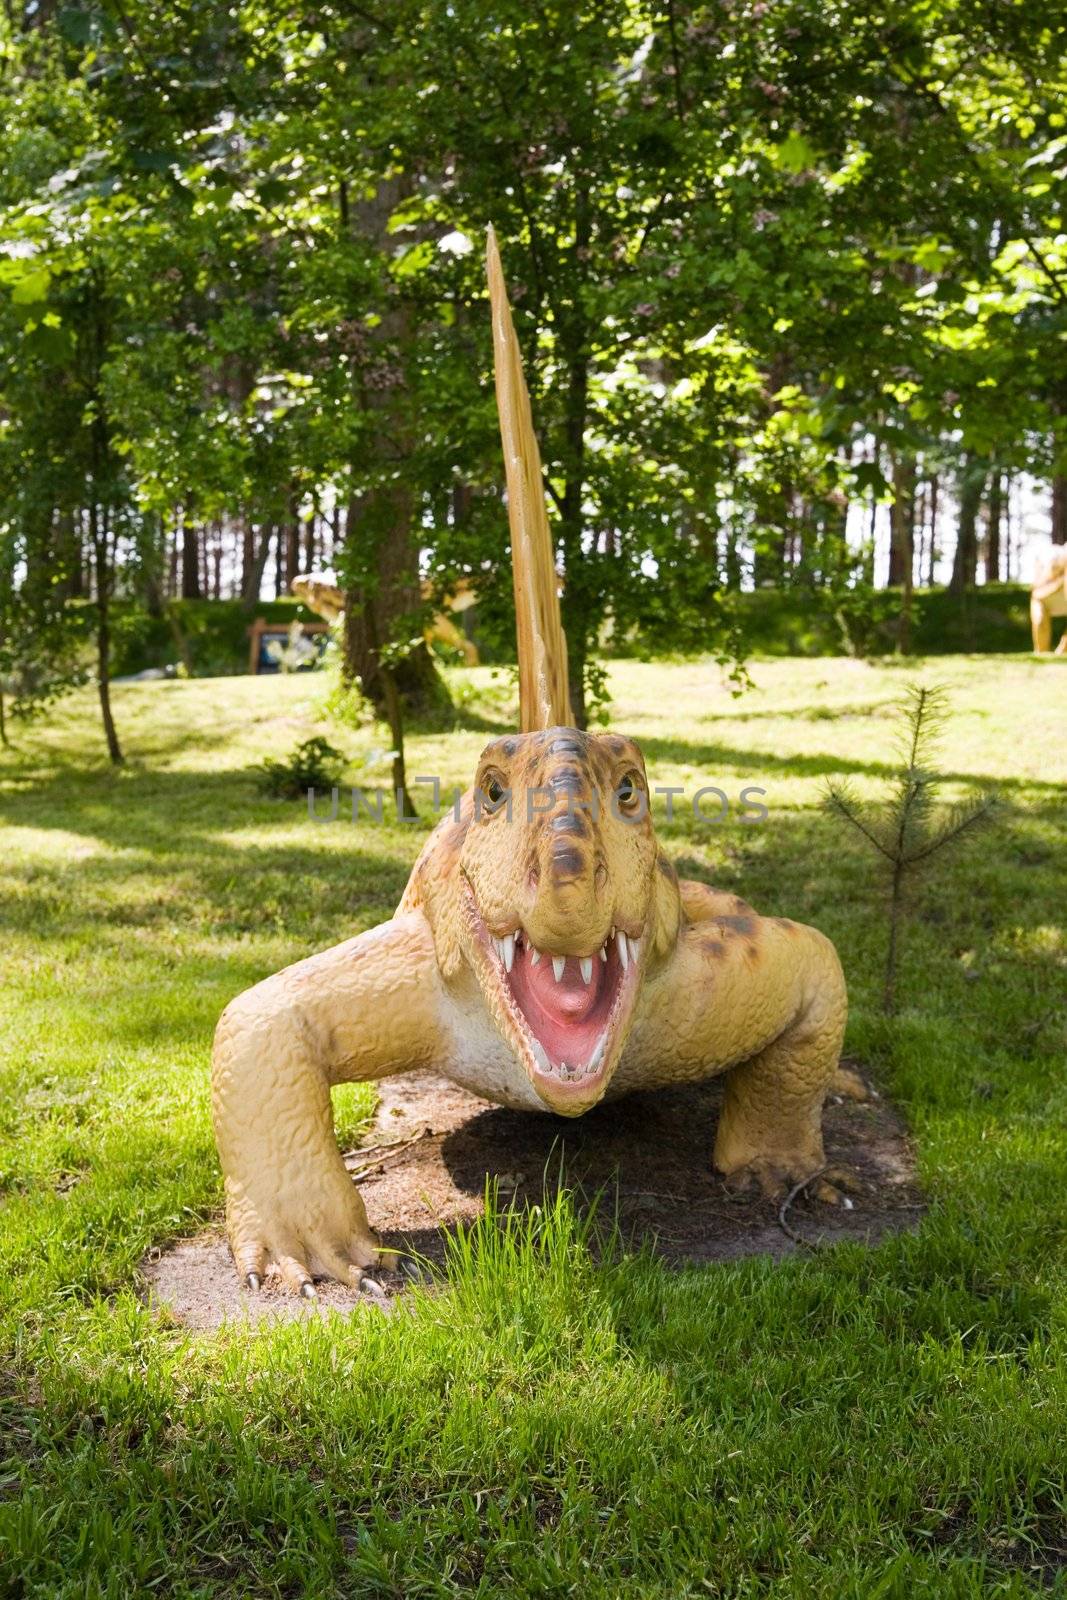 Jurassic park - set of dinosaurs - Dimetrodon grandis